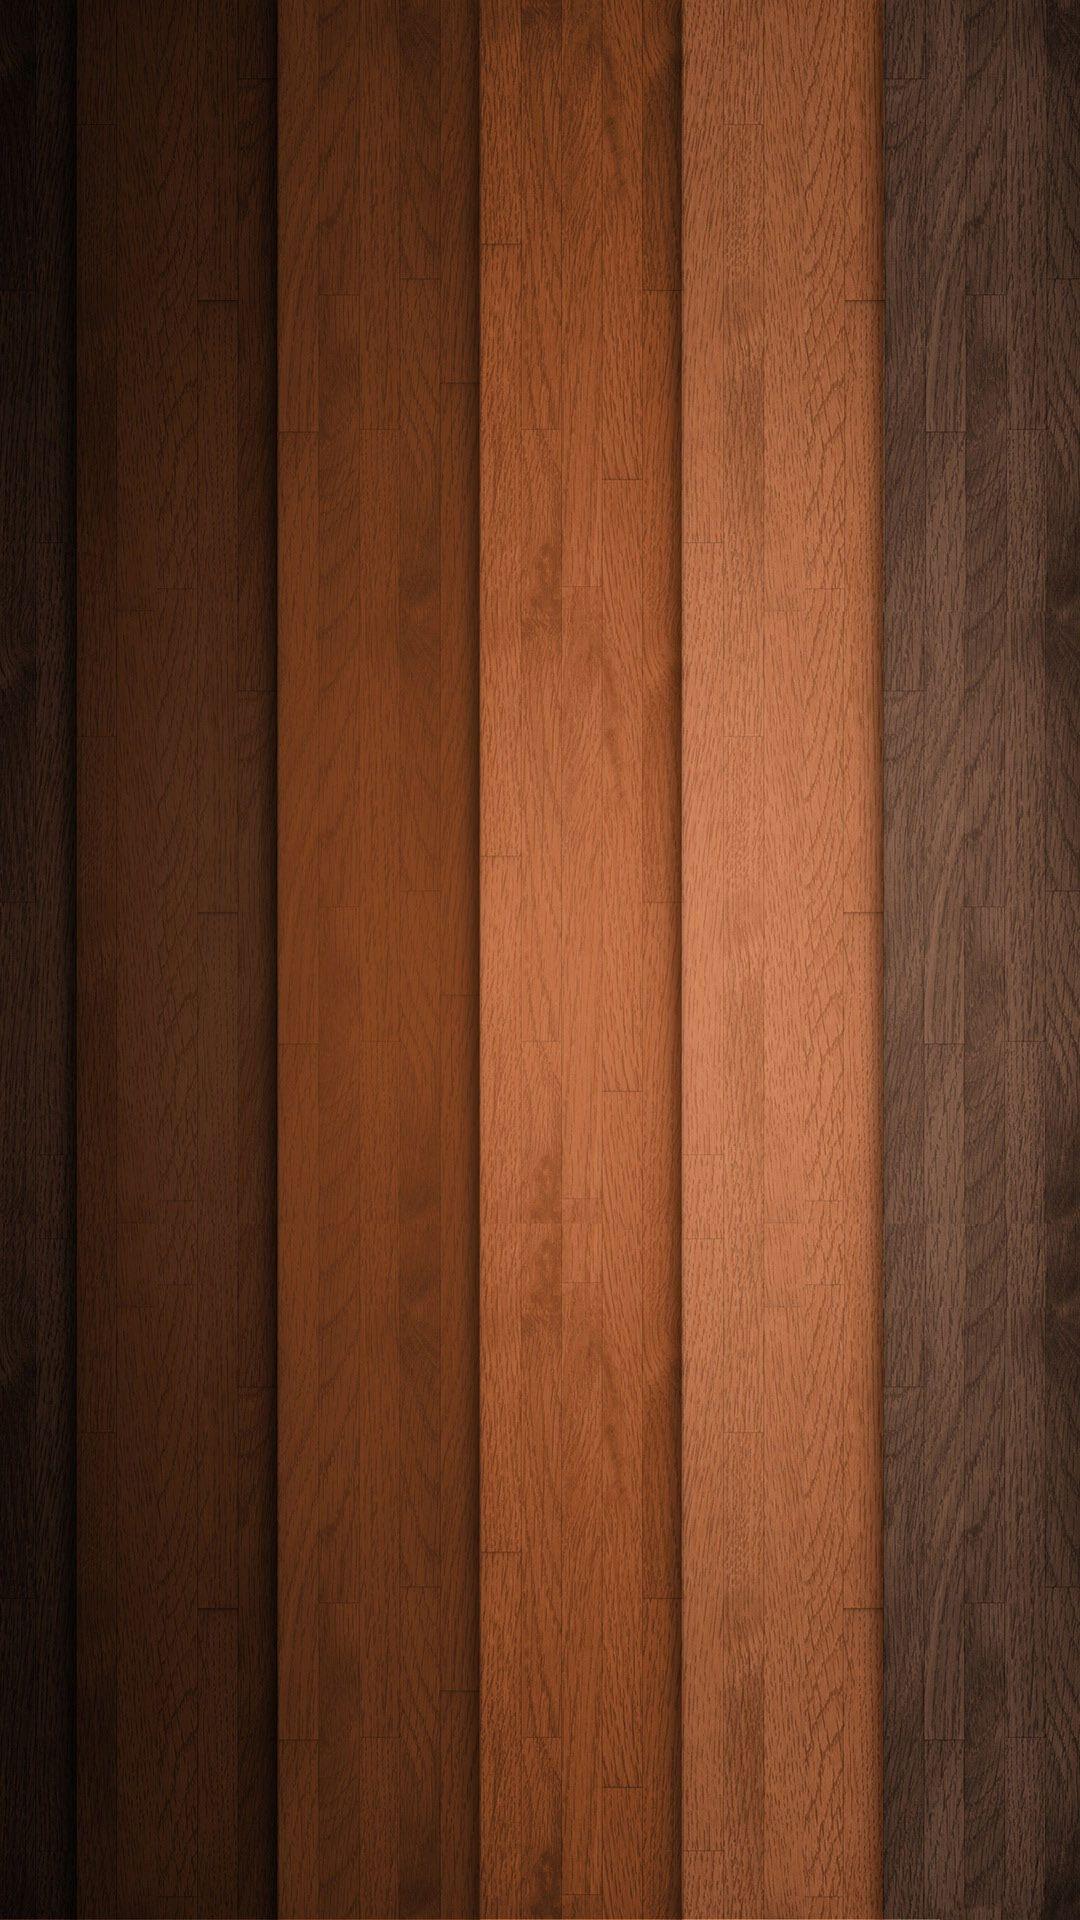 Wood Planks Pattern Texture iPhone 6 Plus HD Wallpaper. Wood wallpaper, Wood grain wallpaper, Wood iphone wallpaper